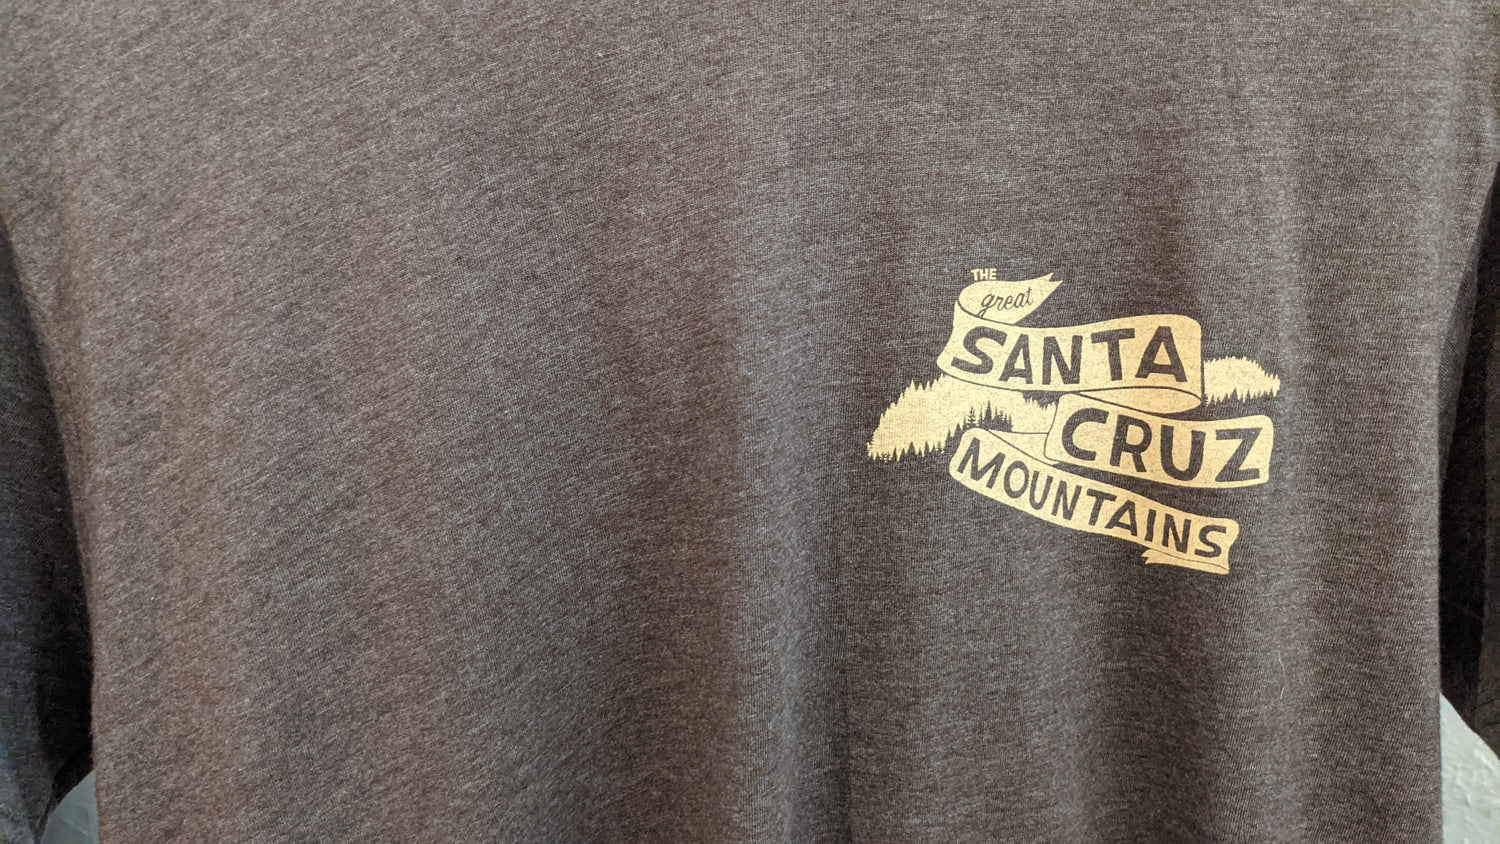 Close up of shirt front by Great Santa Cruz Mountains